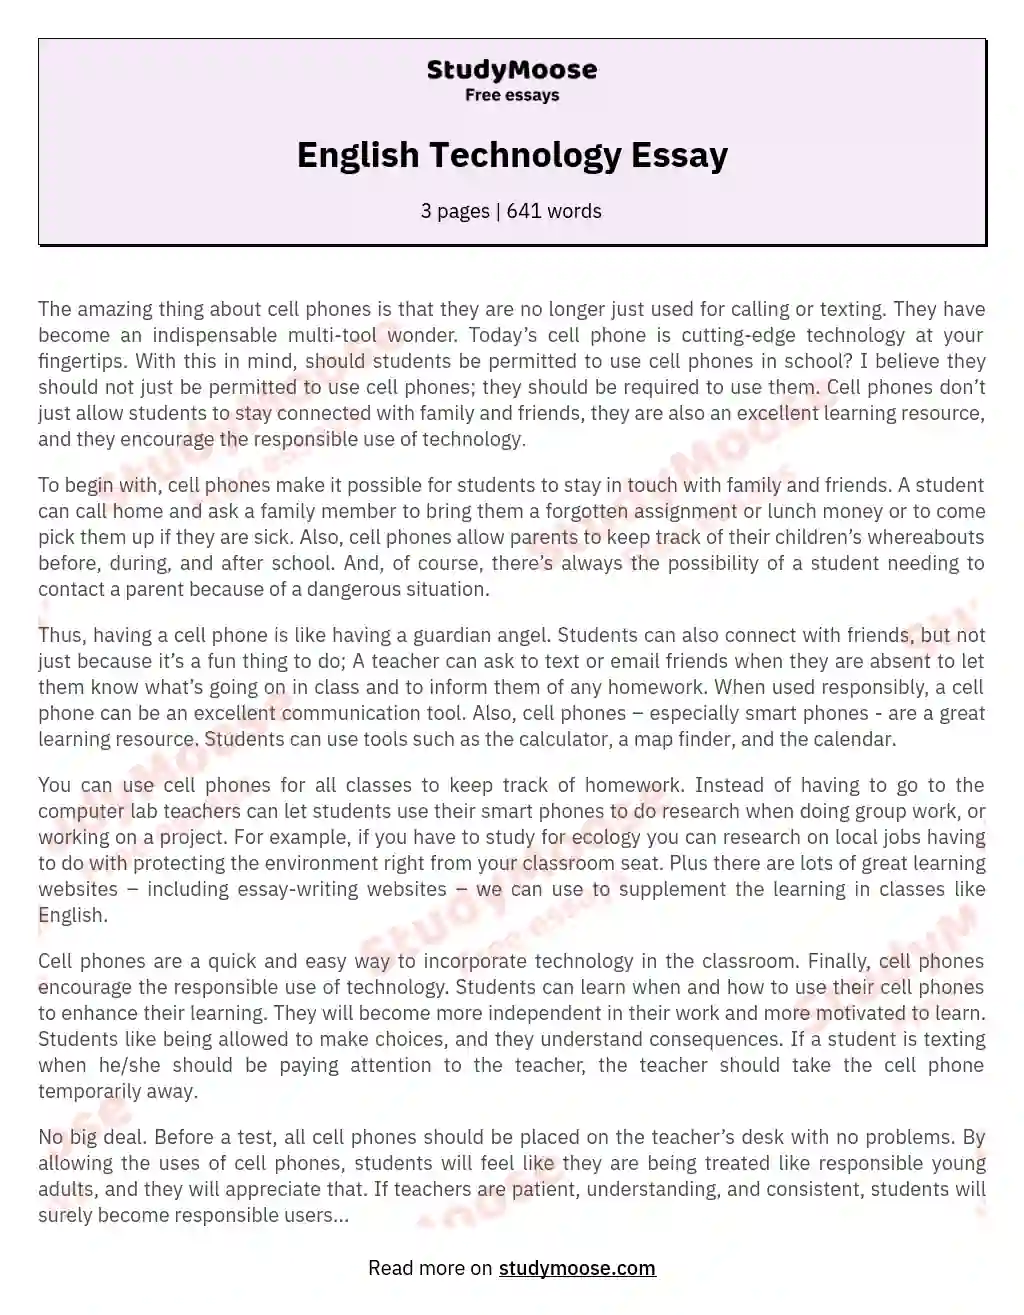 English Technology Essay essay